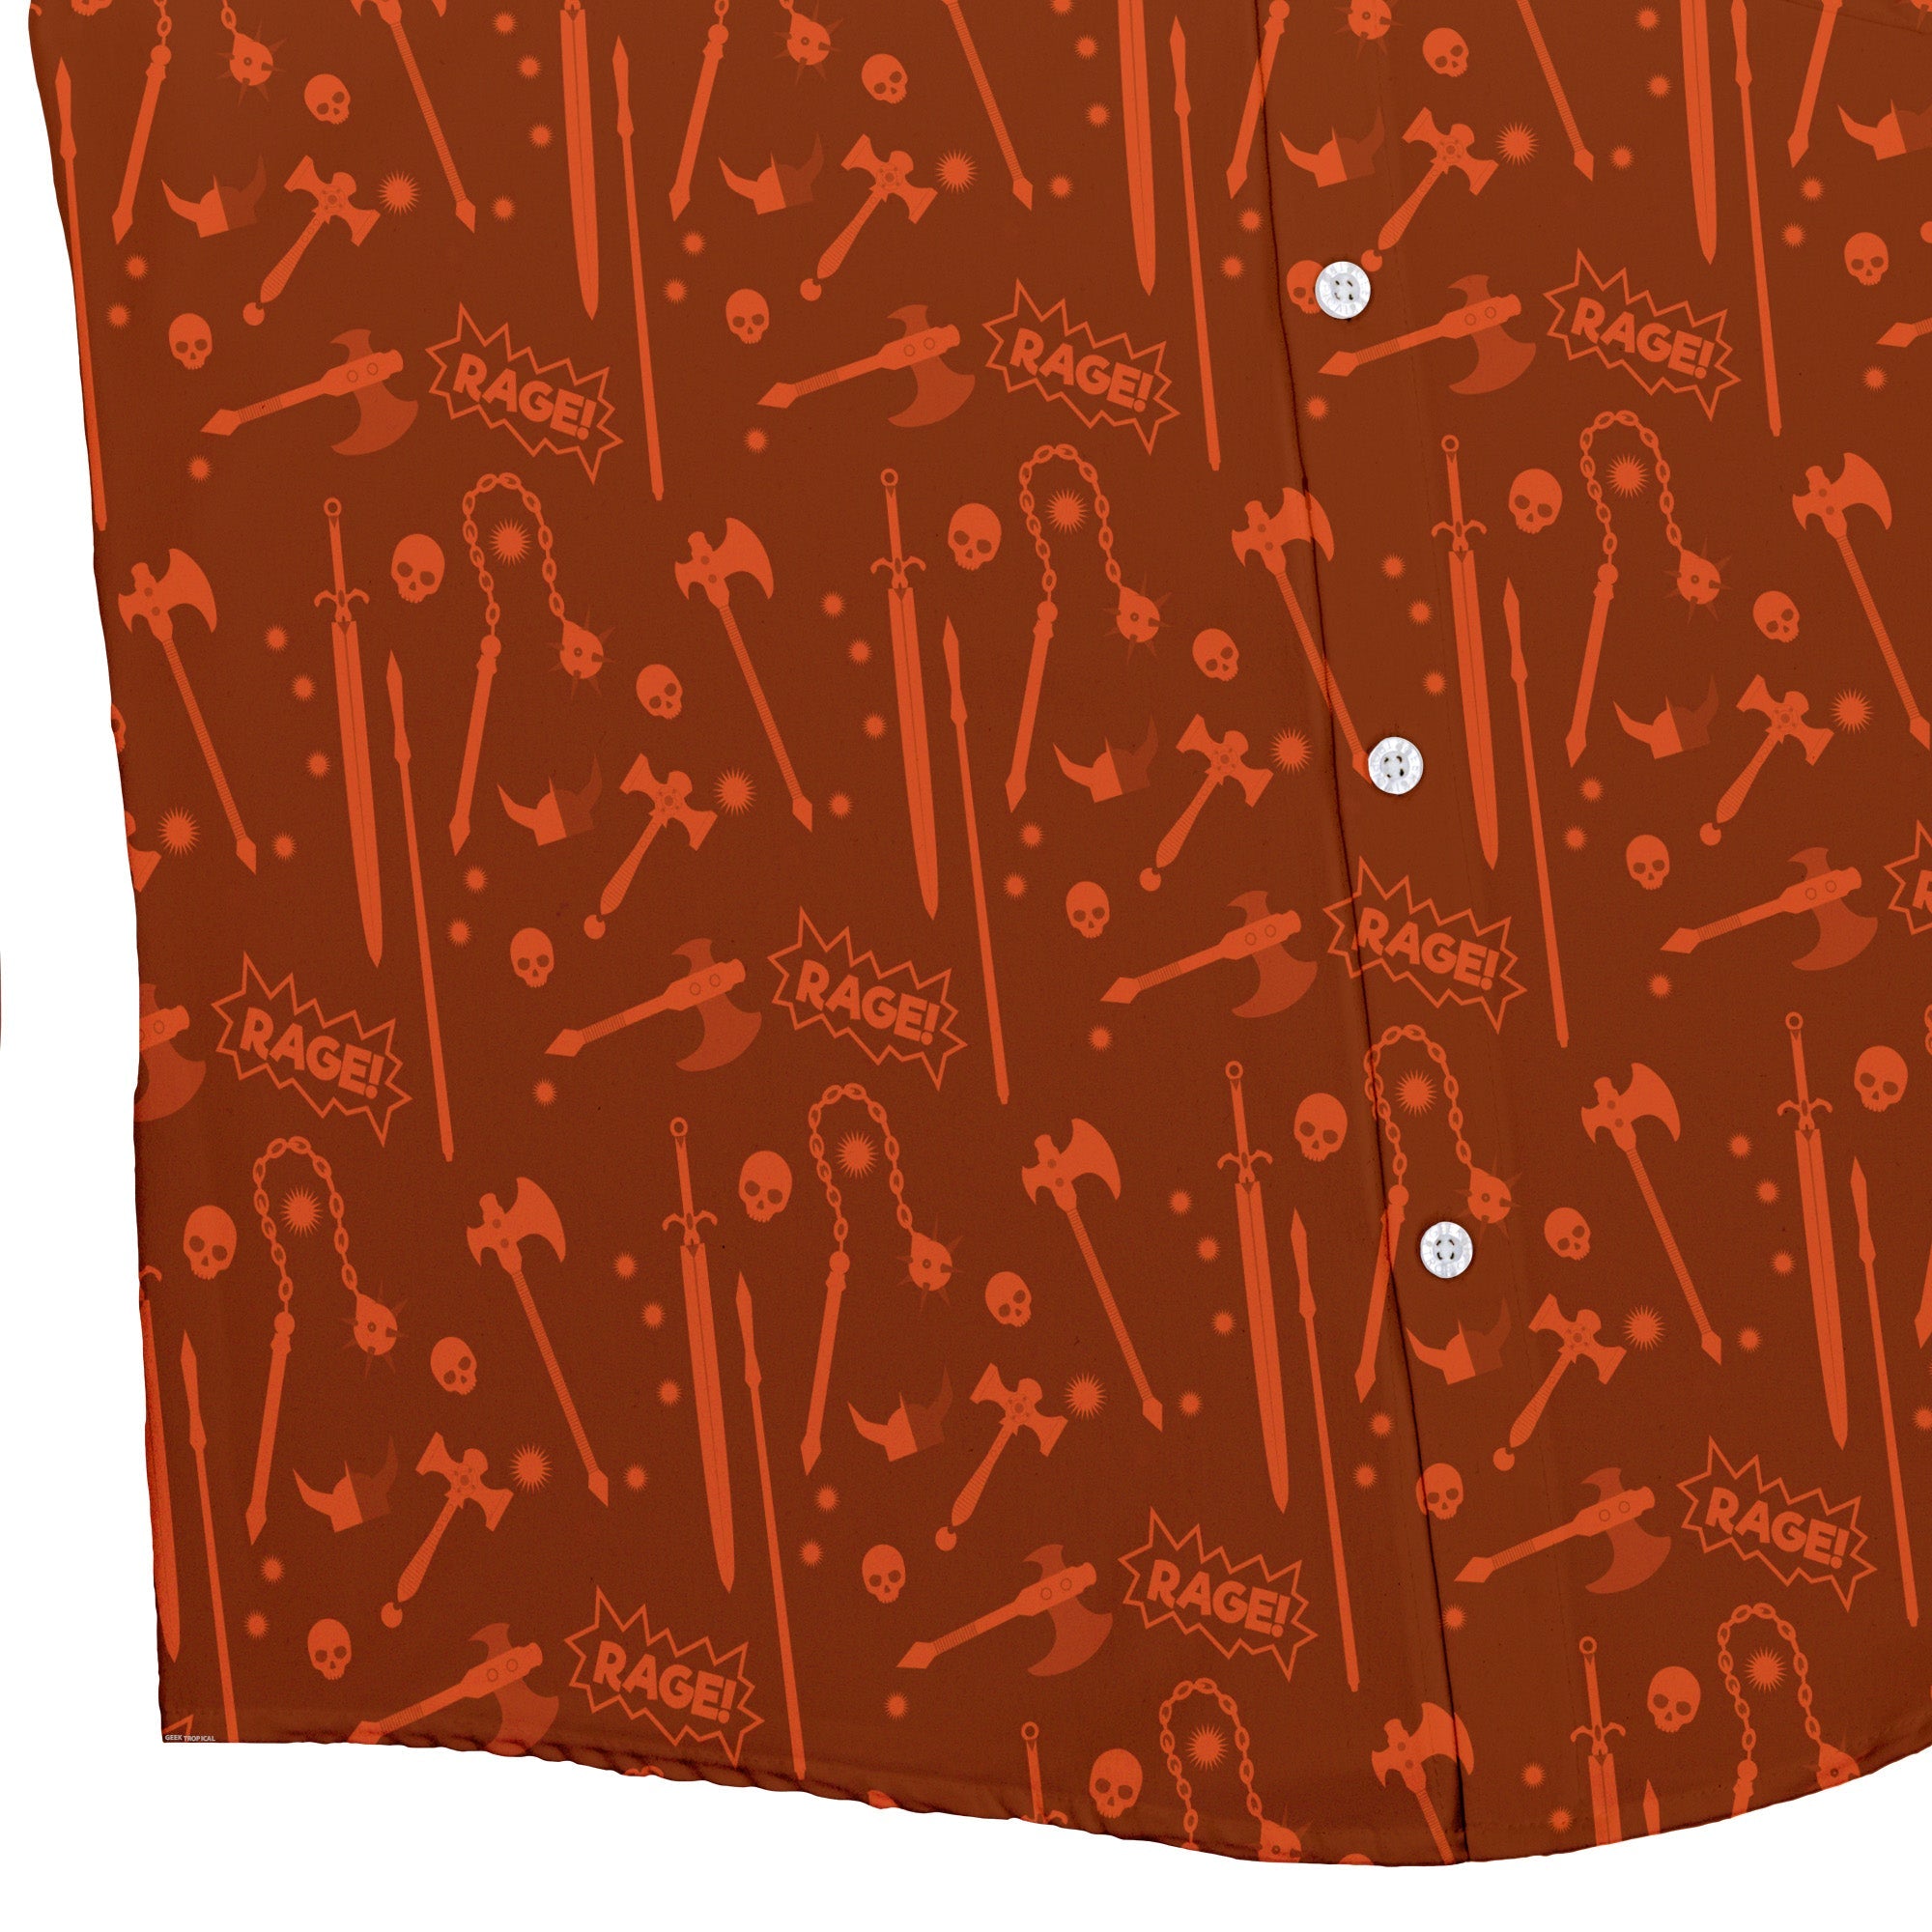 Dnd Barbarian Class Button Up Shirt - adult sizing - Design by Heather Davenport - dnd & rpg print